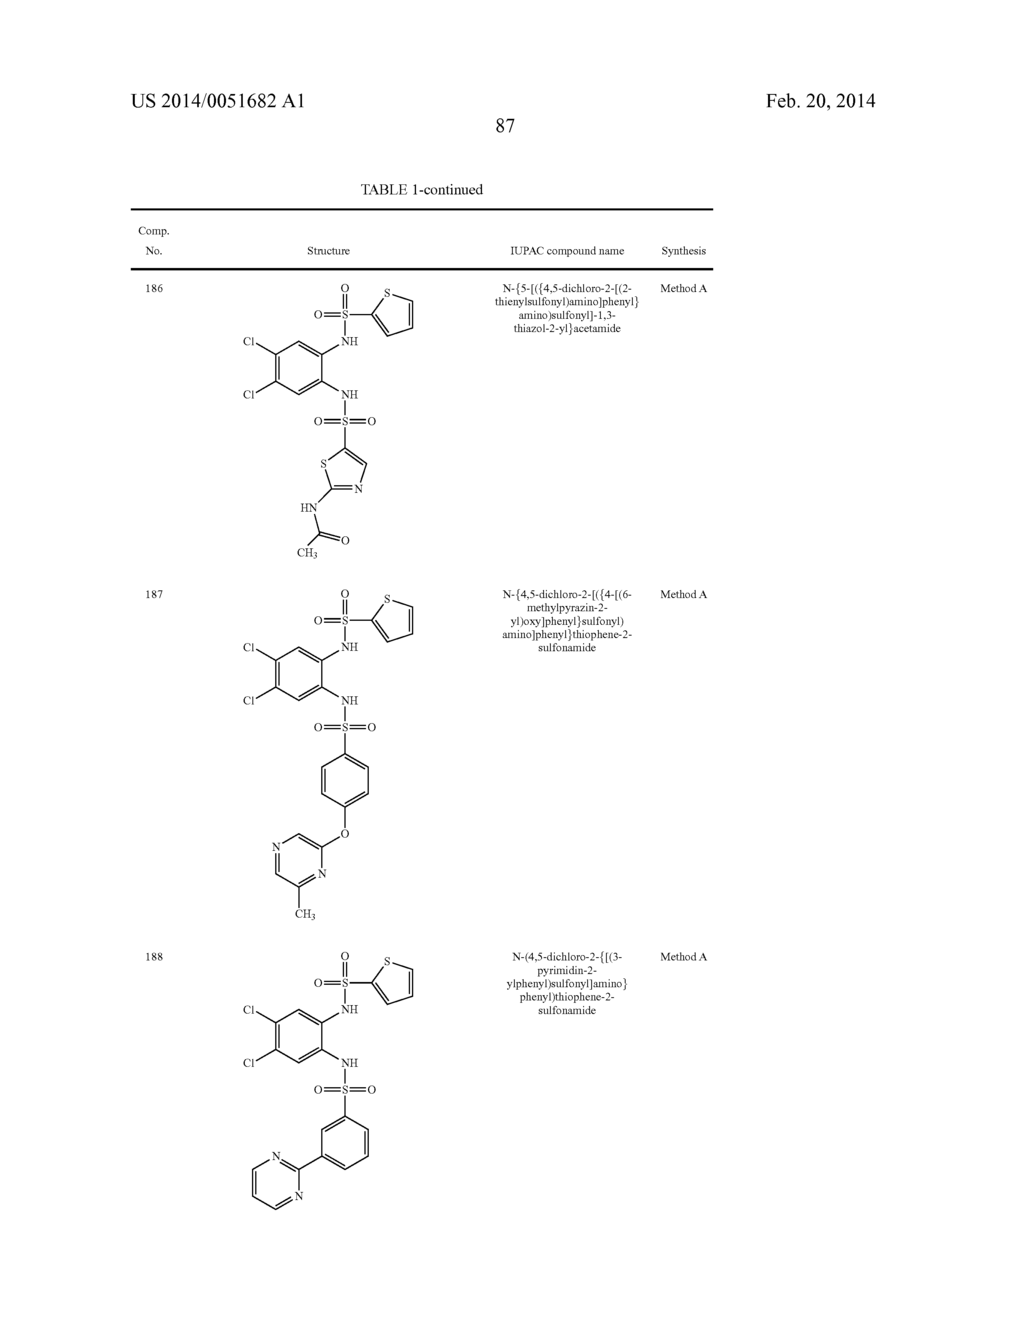 NOVEL 1,2- BIS-SULFONAMIDE DERIVATIVES AS CHEMOKINE RECEPTOR MODULATORS - diagram, schematic, and image 88